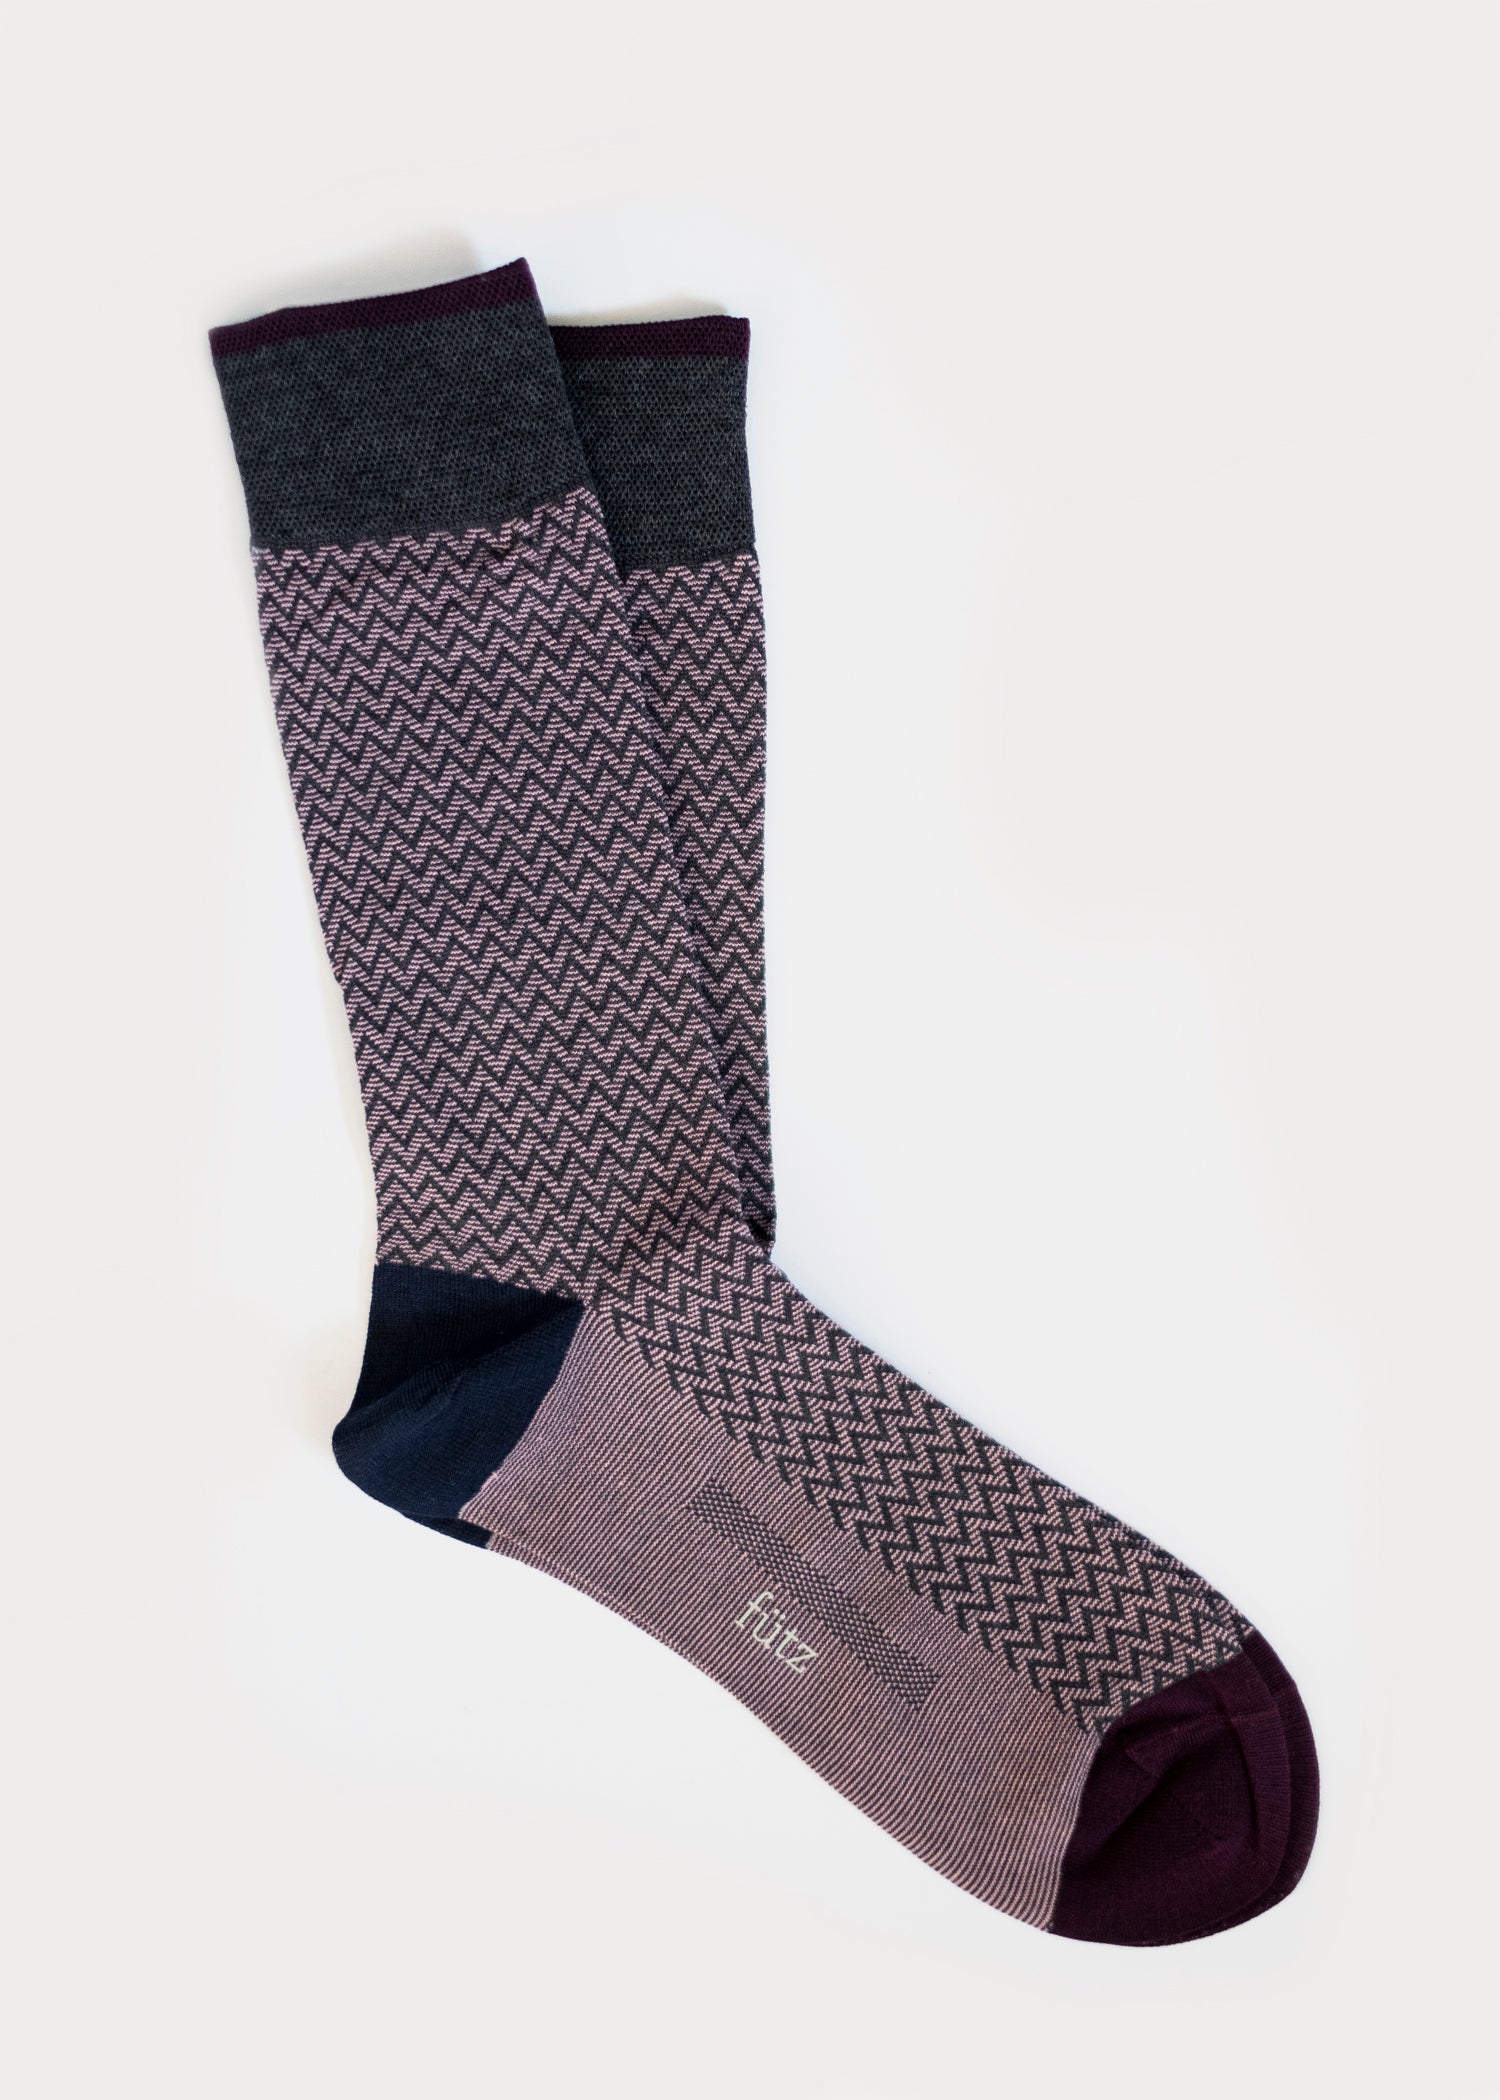 Parallels - Charcoal – fütz | Socks Simplified